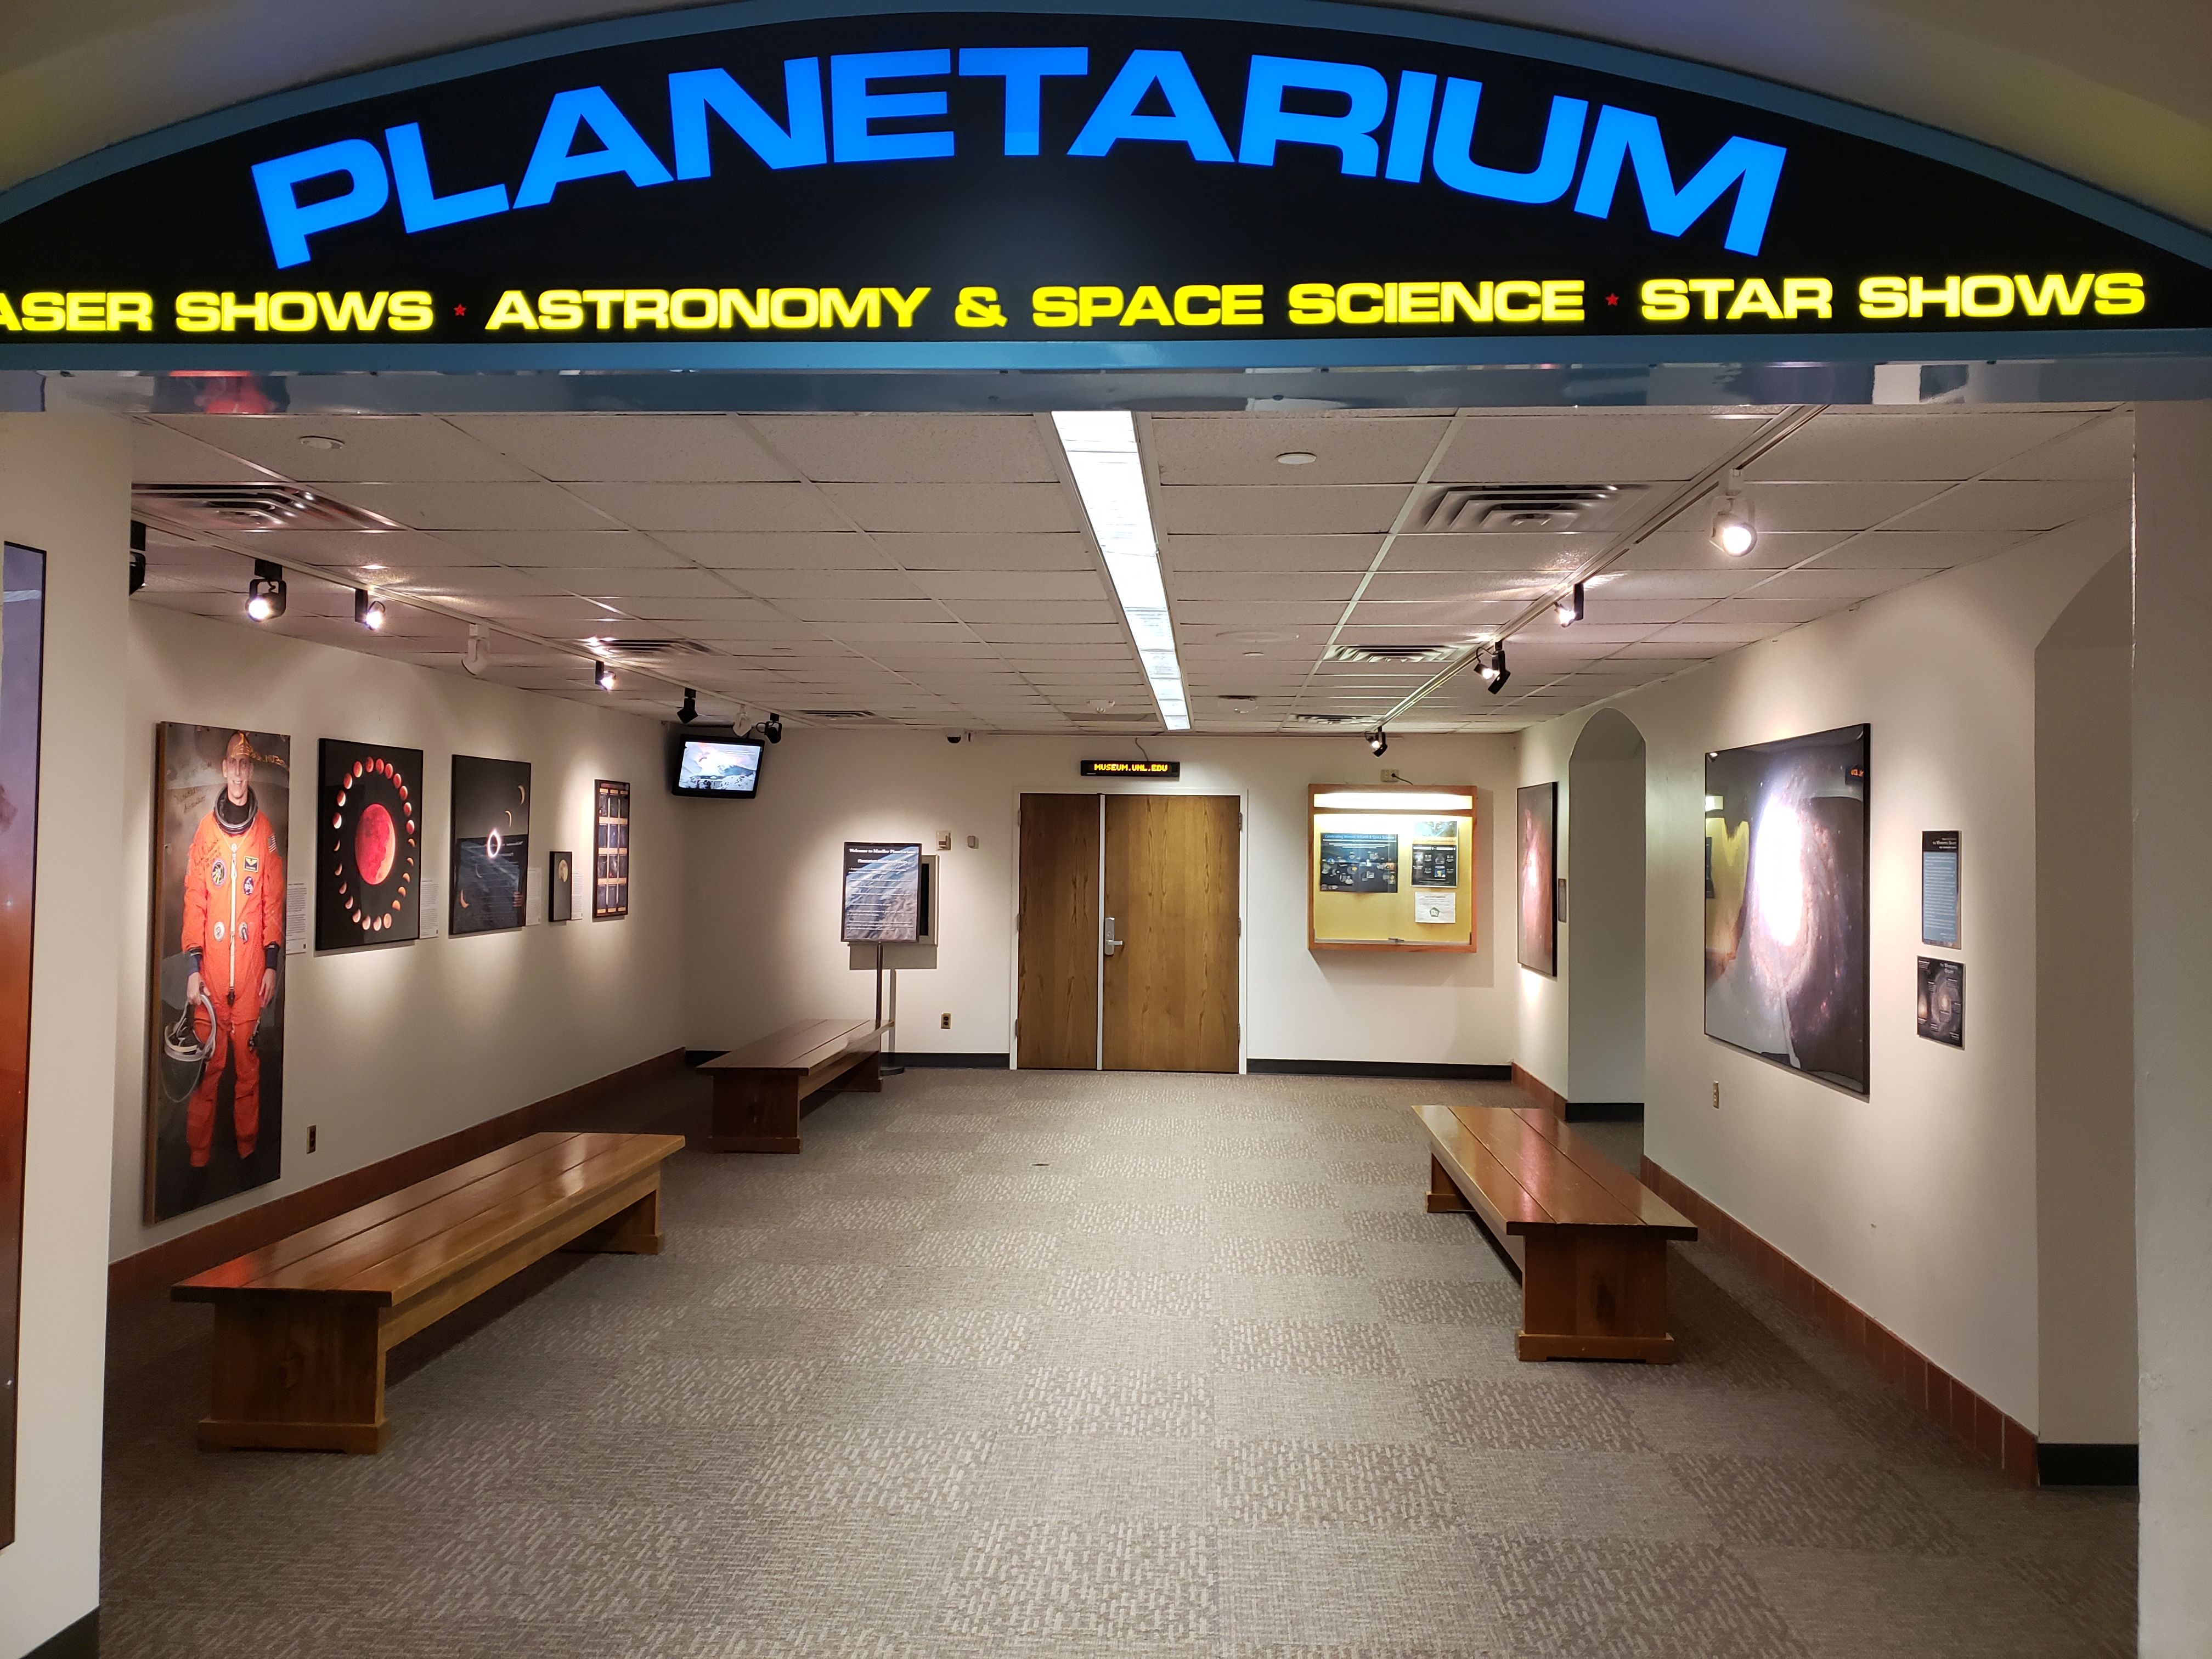 Planetarium lobby today